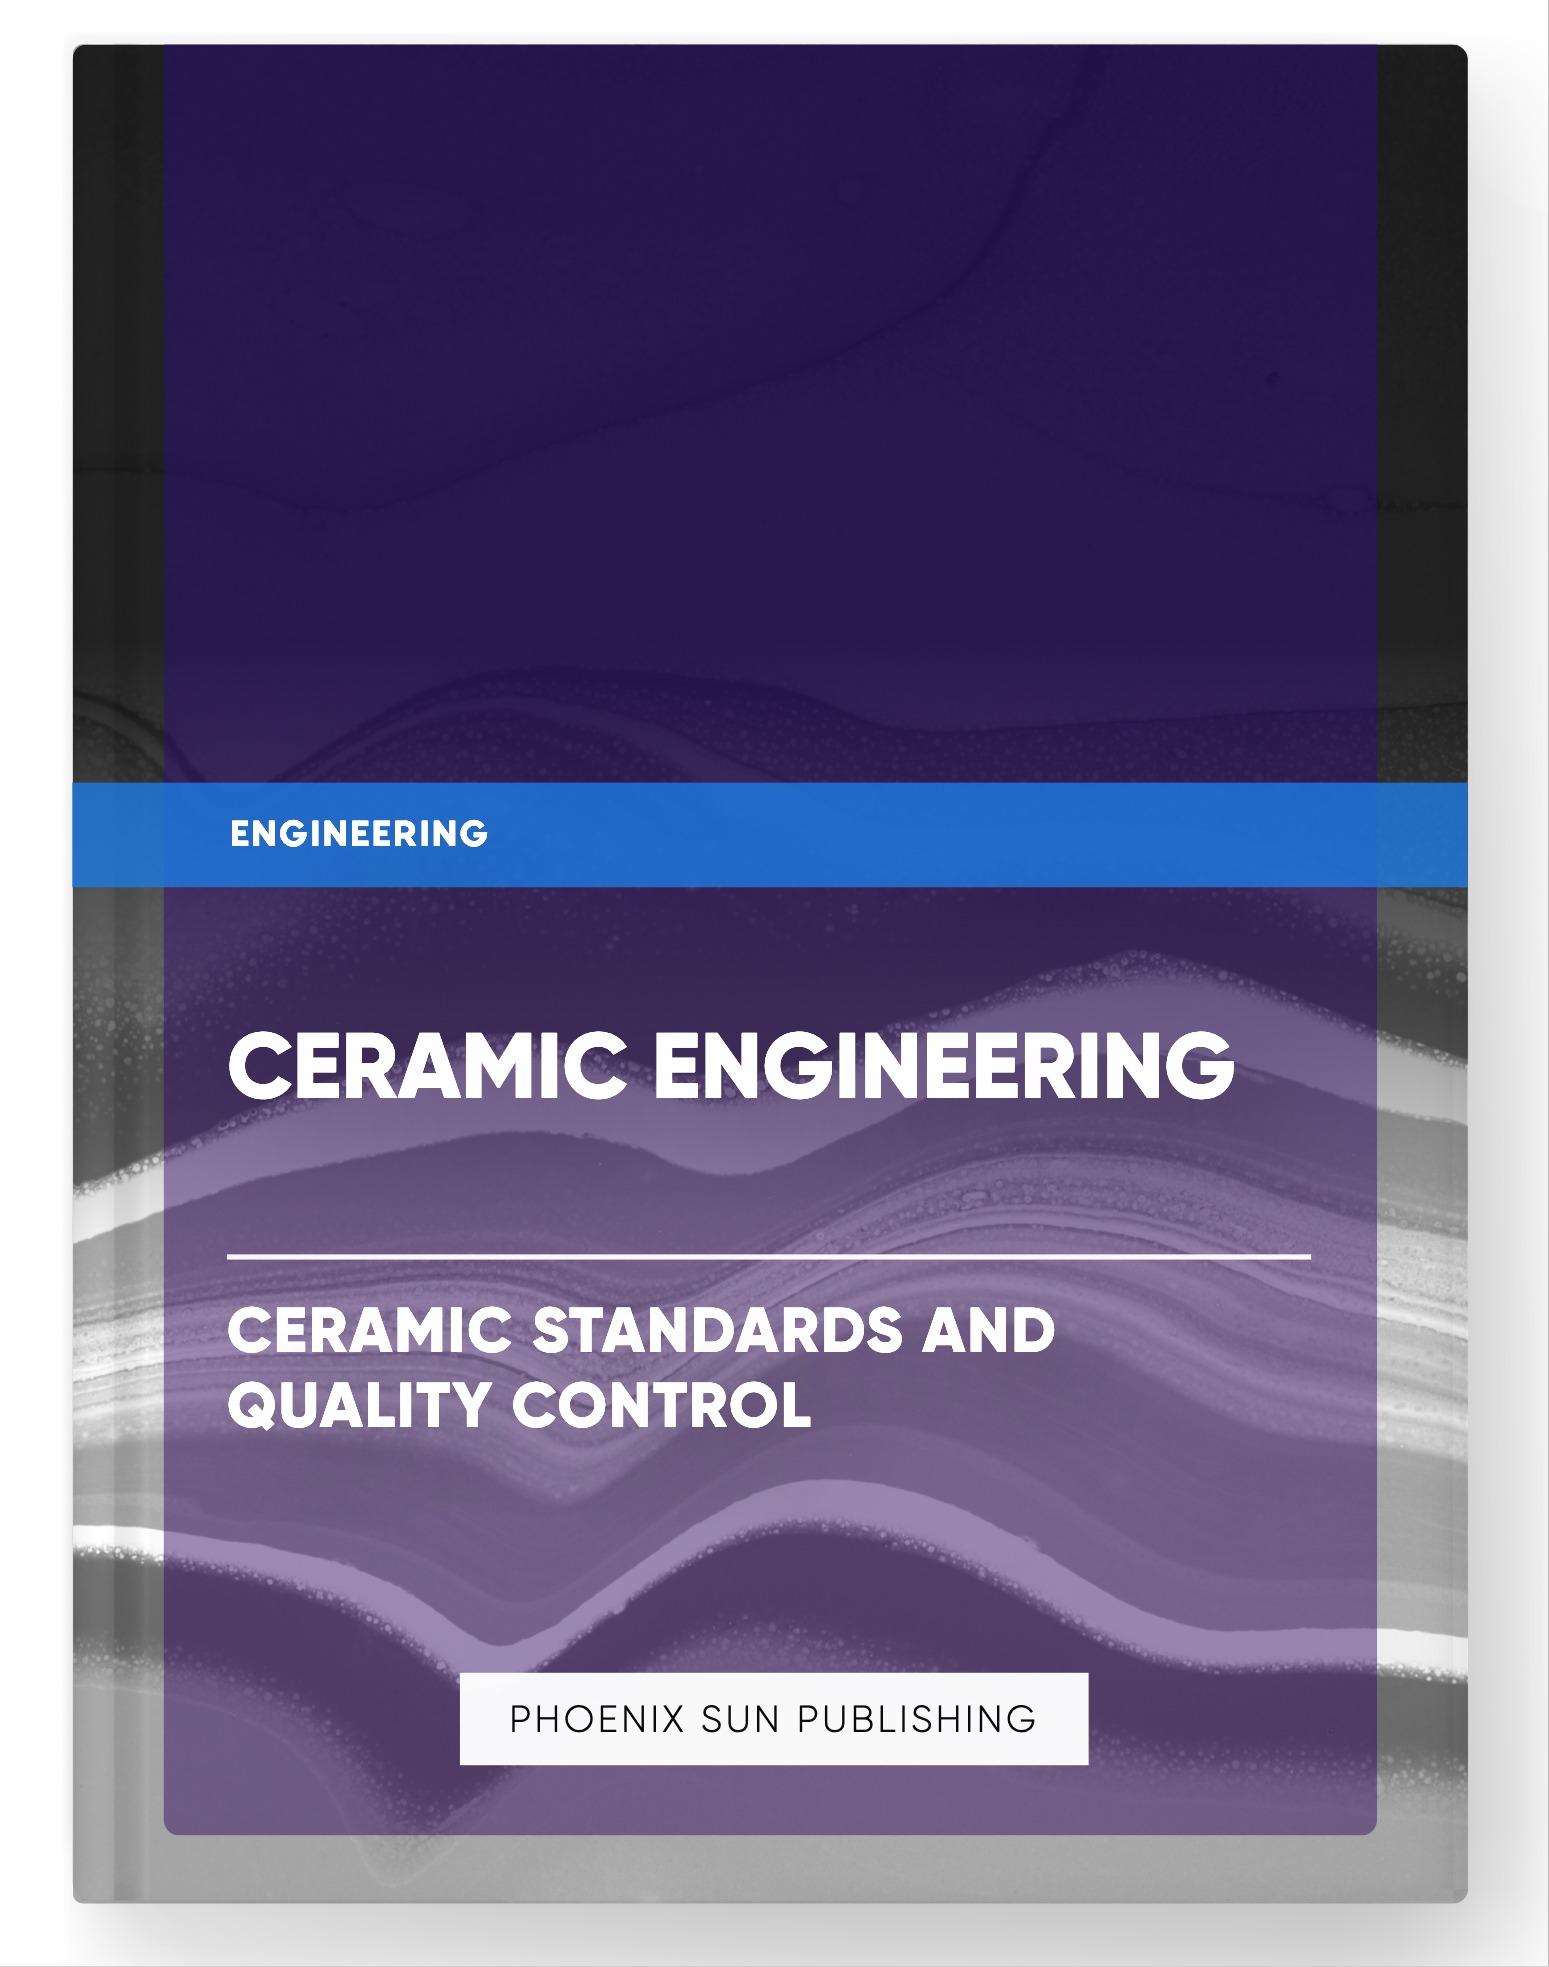 Ceramic Engineering – Ceramic Standards and Quality Control